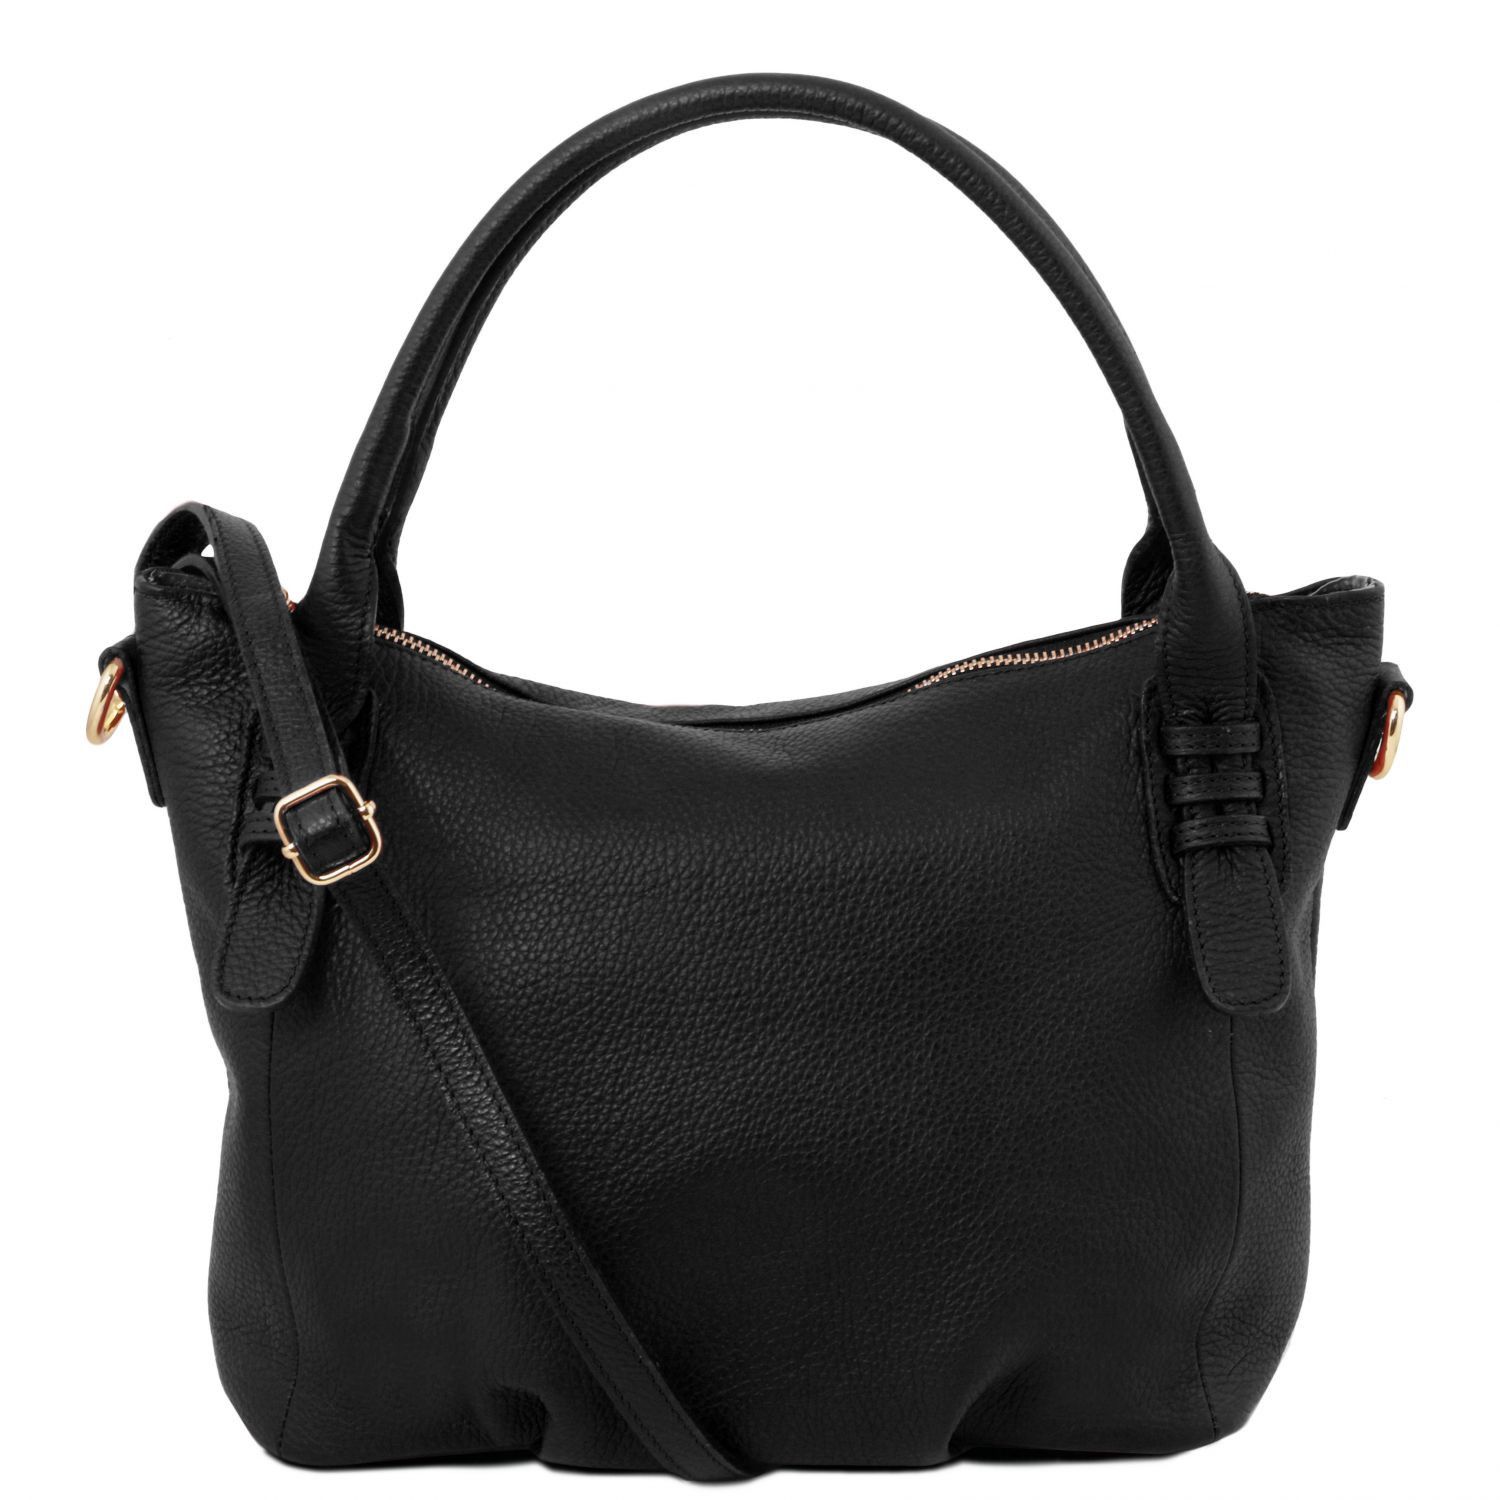 TL Bag Soft Leather Handbag Black TL141705